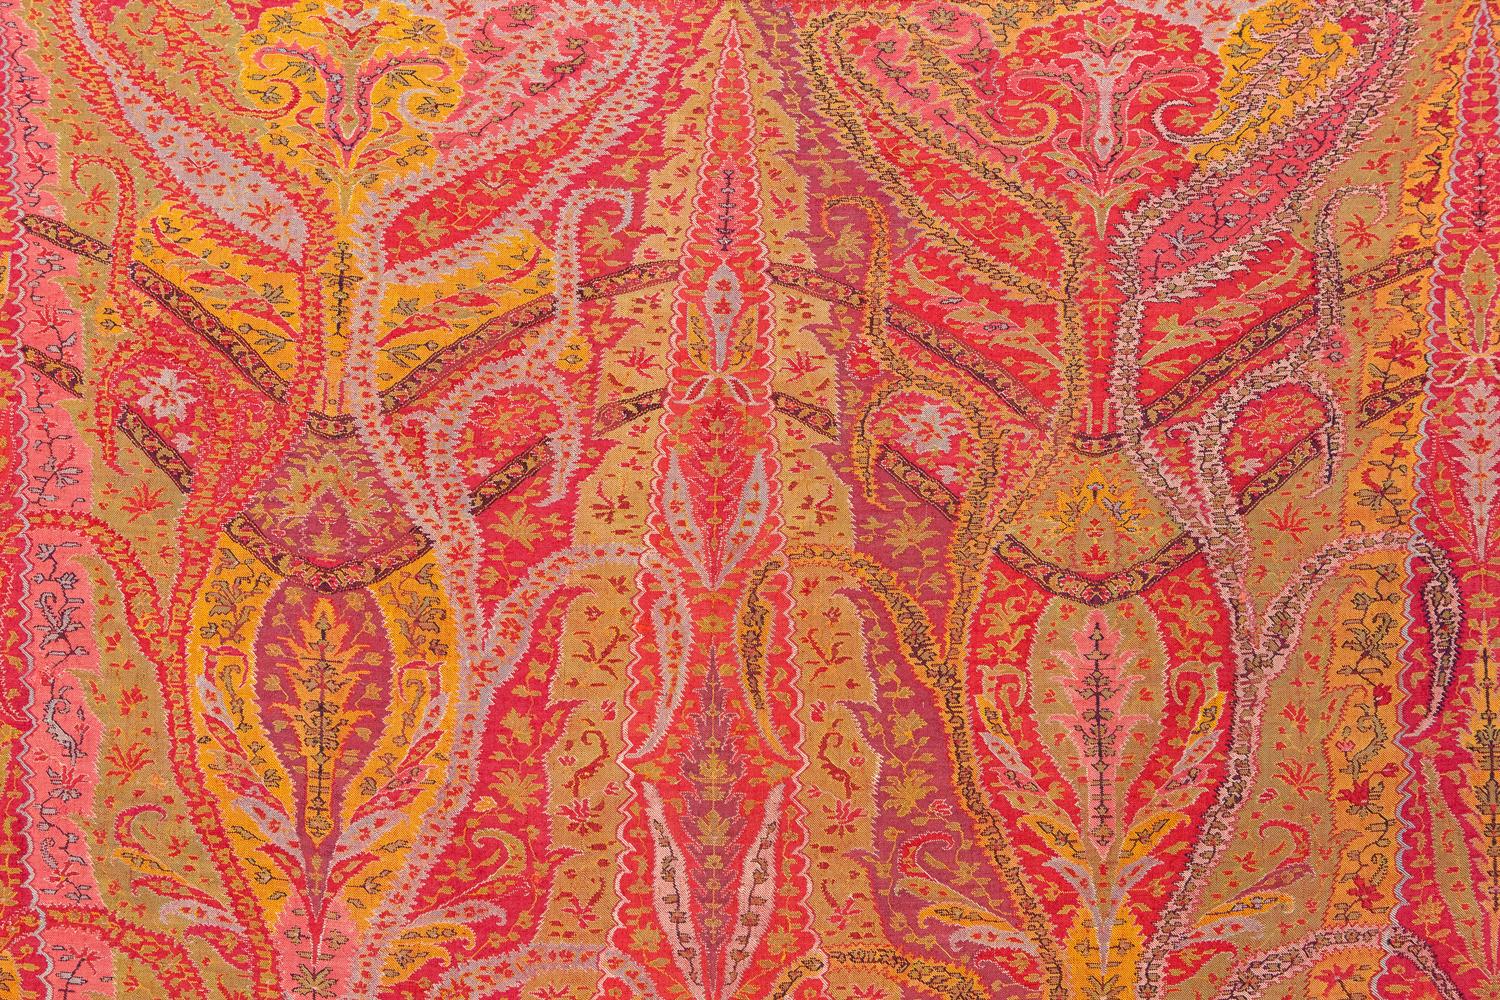 Other Kashmir Shawl Antique Indian Paisley And Arabesque Motifs Textile, 1800-1820 For Sale